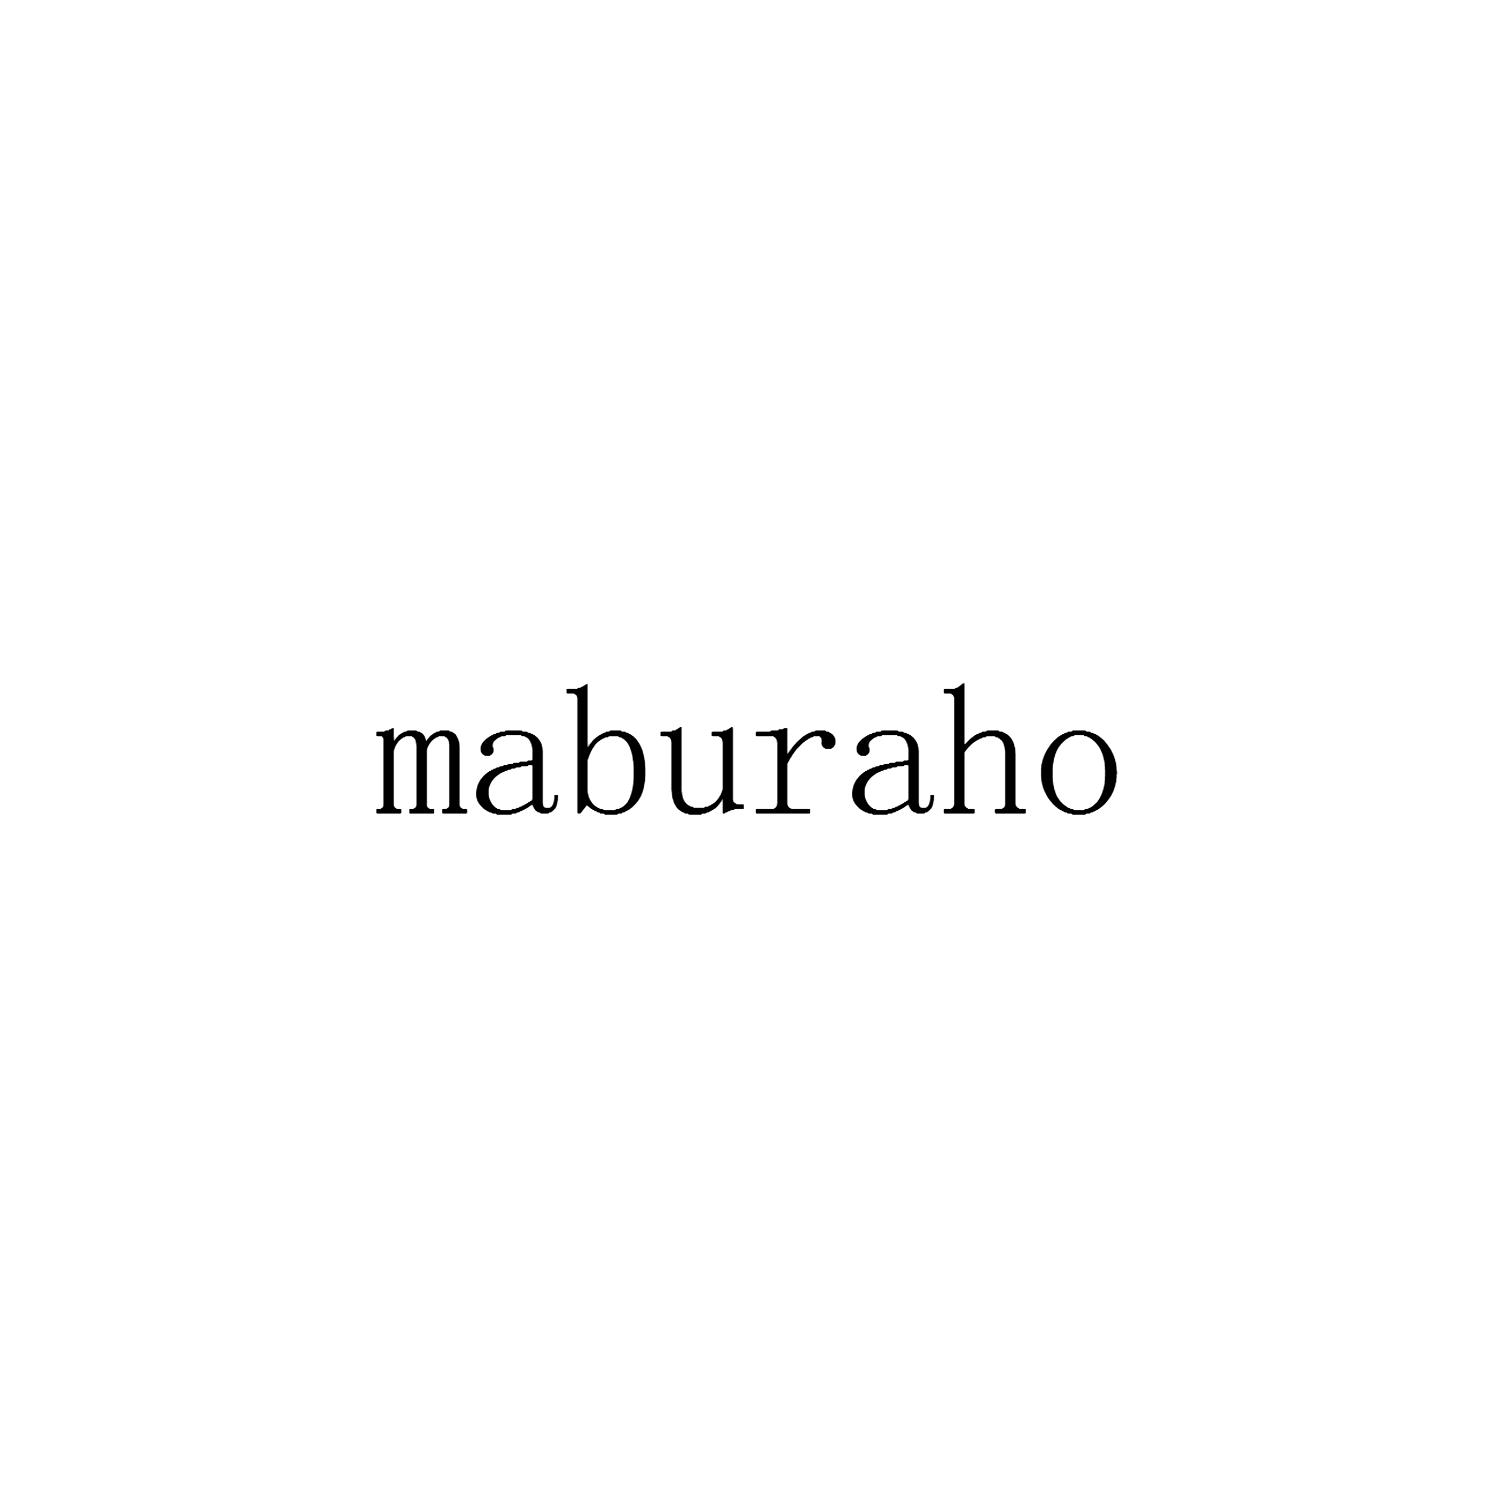 maburaho